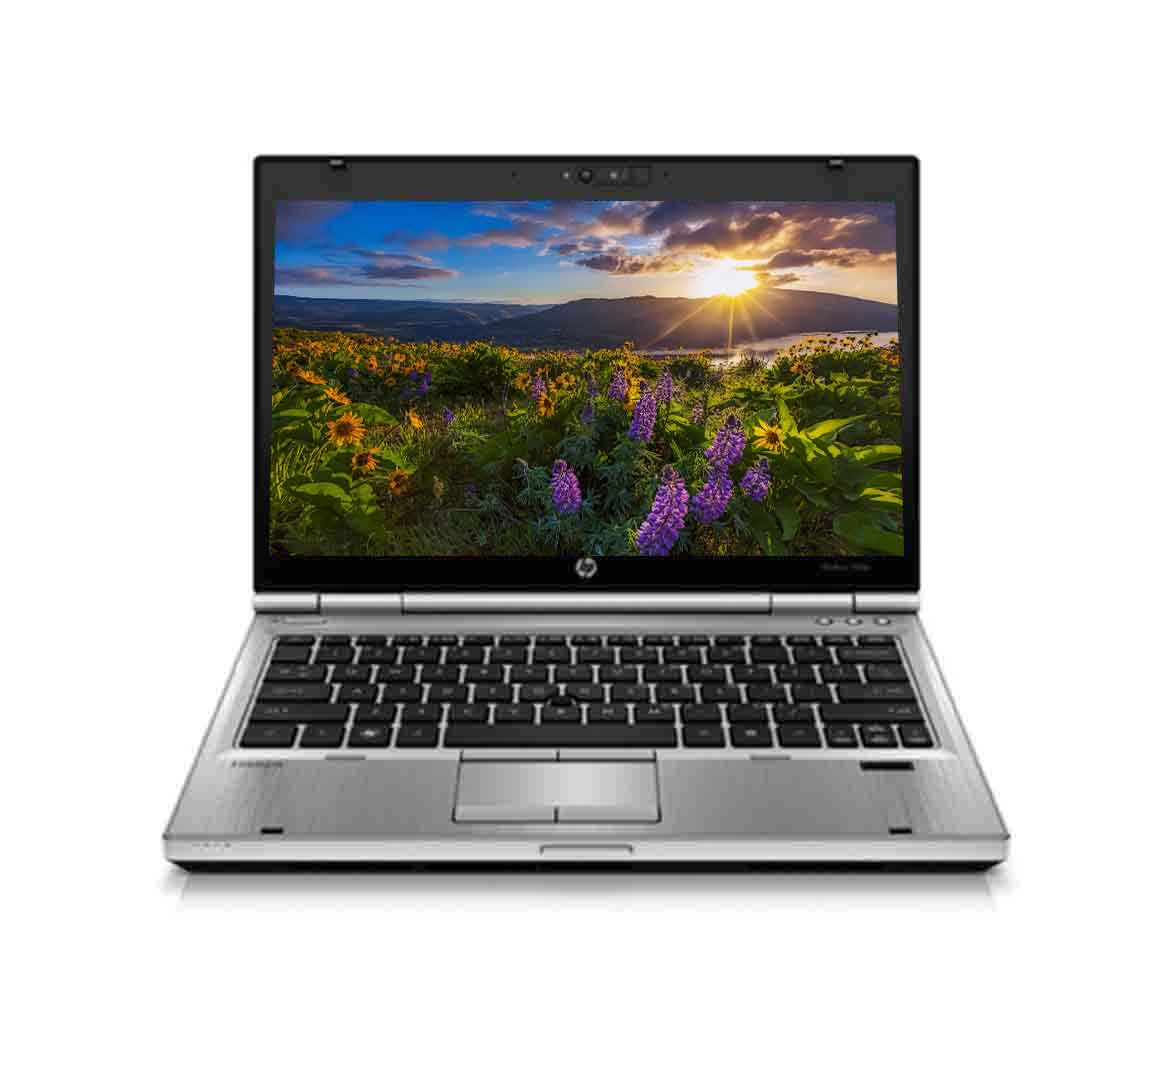 HP EliteBook 2560p Business Laptop, Intel Core i5-2nd Generation CPU, 4GB RAM, 500GB HDD, 12.5 inch Display, Windows 10 Pro, Refurbished Laptop